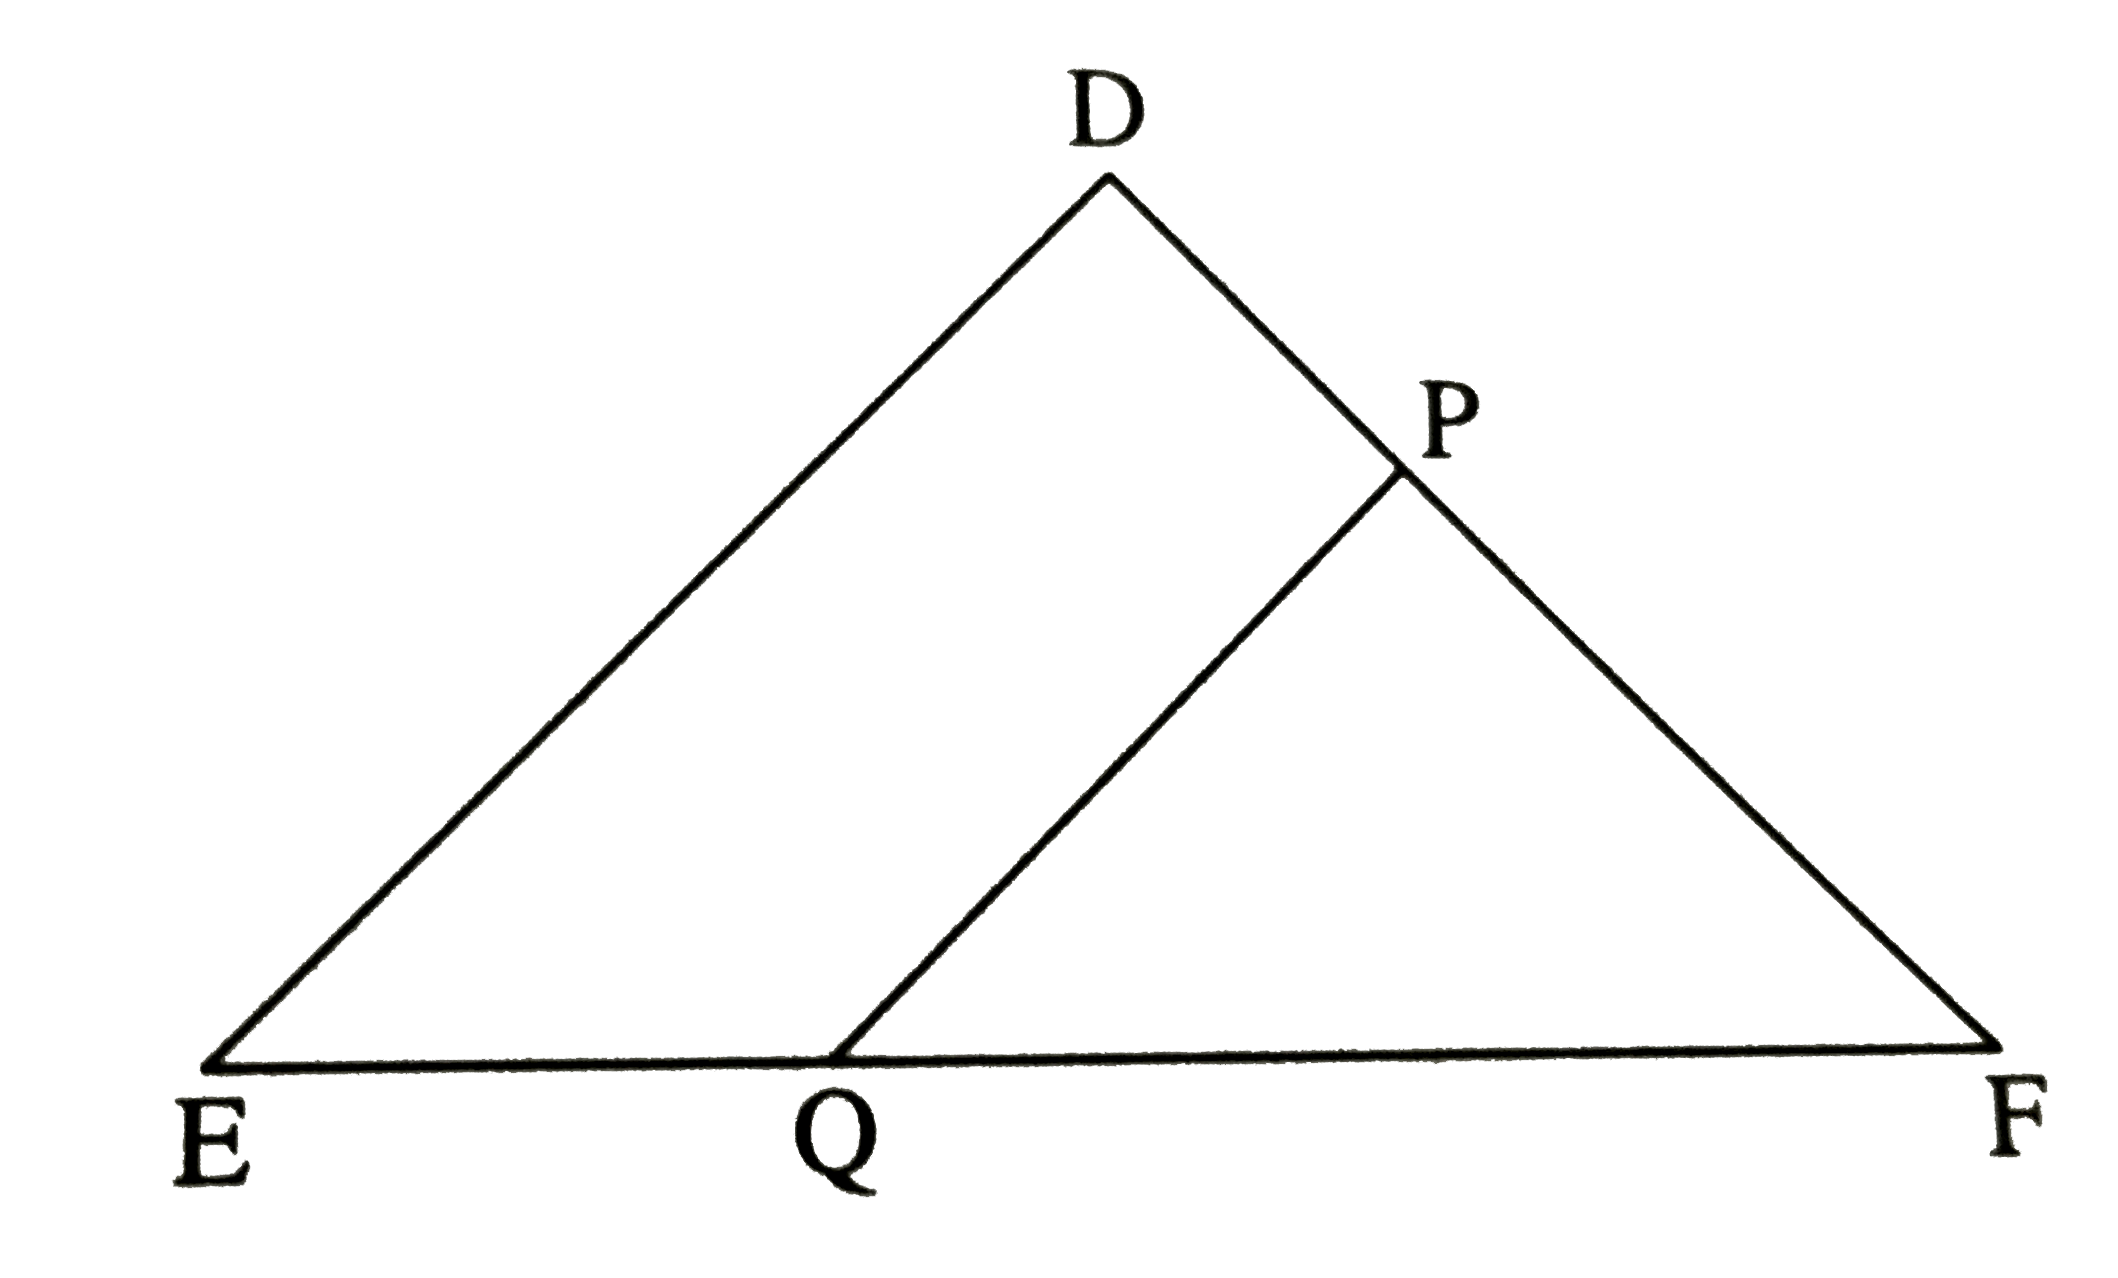 In the figure  seg PQ|| seg DE, A(DeltaPQF)=20 units PF=2DP,then find A(square DPQE) by completing the following activity:      Activity: A(DeltaPQF)=20 sq units, PF=2DP.   Let us assume DP=x   :.PF=2x   DF=DE+square=square+square=3x   In DeltaFDE and DeltaFPQ.   /FDE~=/square ..........(Corresponding angles)   /FED~=/square .....(Corresponding angles)   :.DeltaFDE~DeltaFPQ .....(AA test)   :.(A(DeltaFDE))/(A(DeltaFPQ))=(square)/(square)=((3x)^(2))/((2x)^(2))=9/4   A(DeltaFDE)=9/4A(DeltaFPQ)=9/4xxsquare=square   A(squareDPQE)=A(DeltaFDE)-A(DeltaFPQ)   =square-square   =square